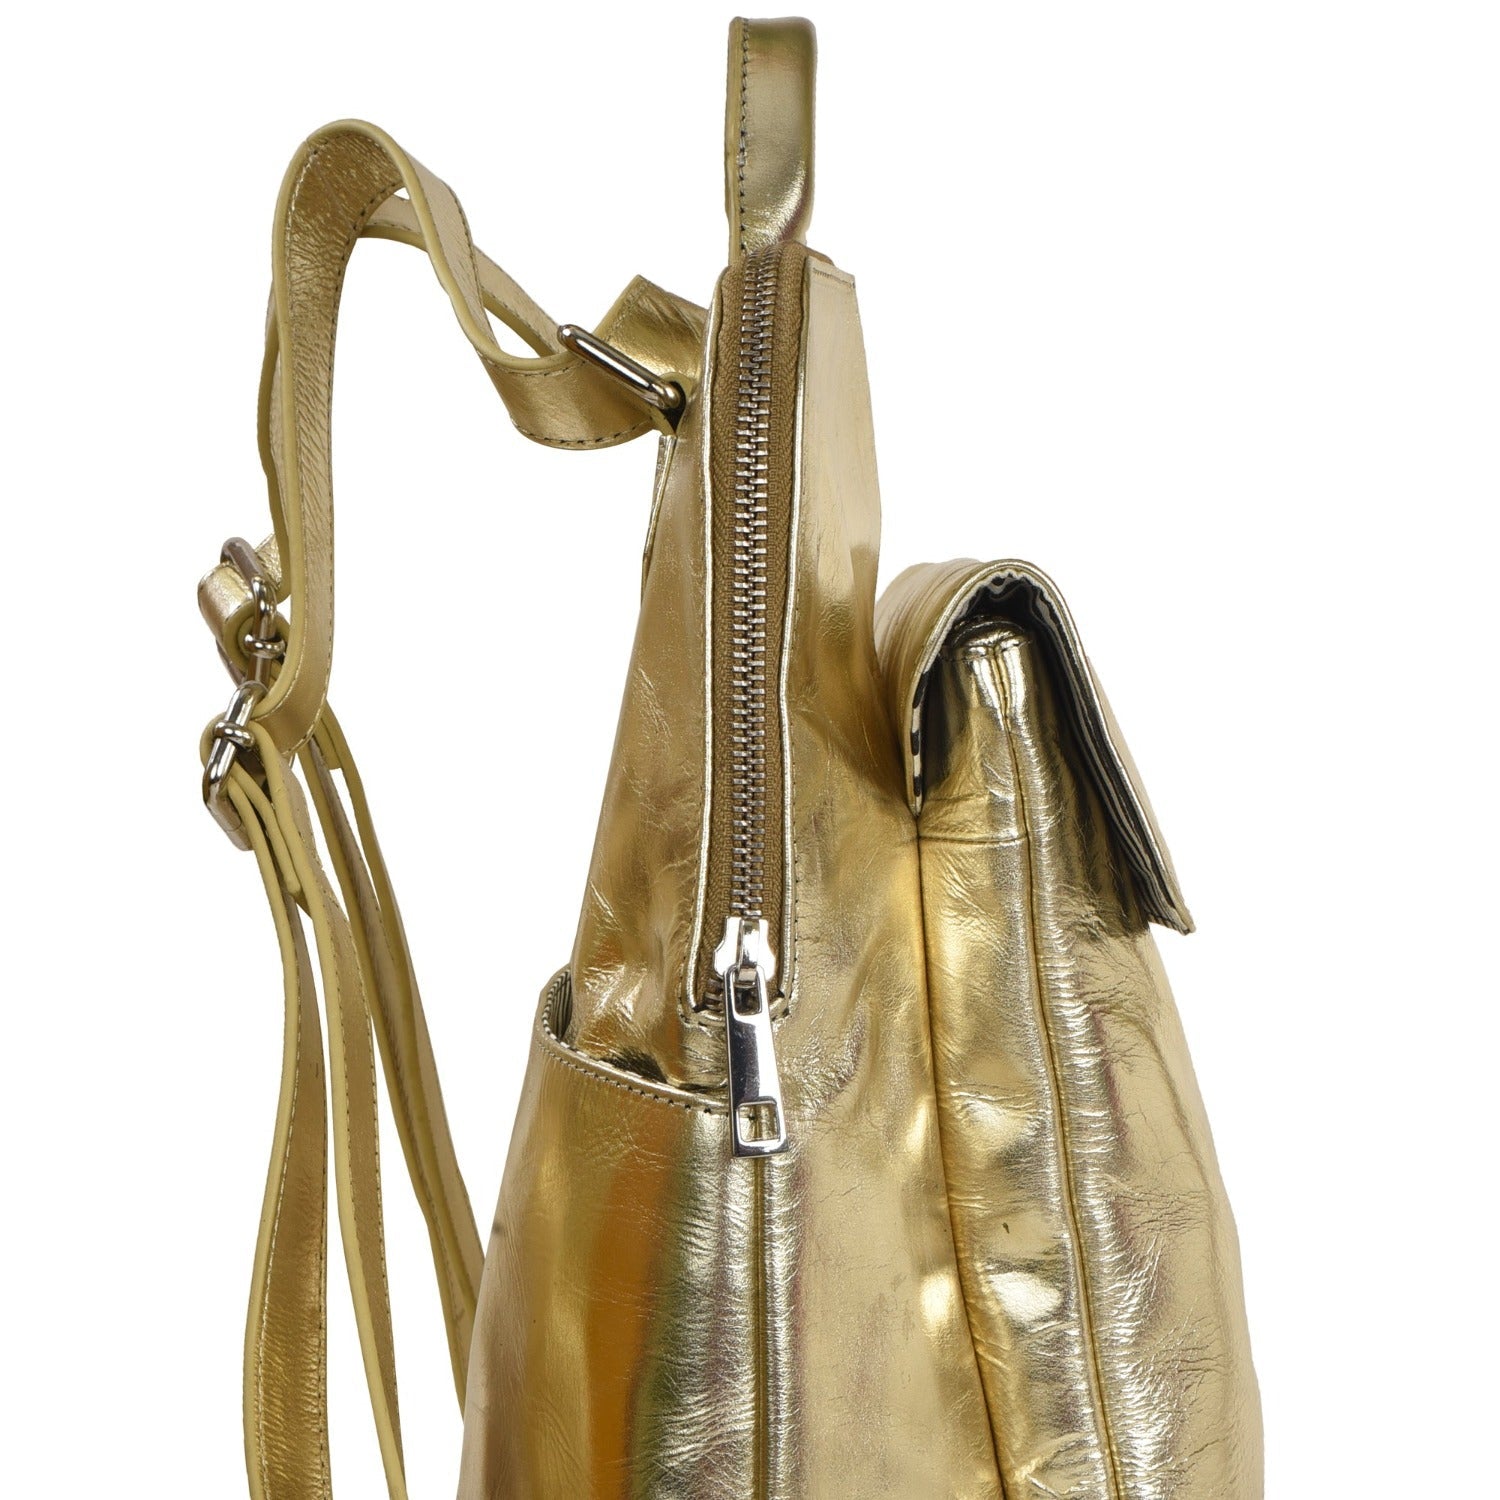 Gold Metallic Leather Flap Pocket Backpack